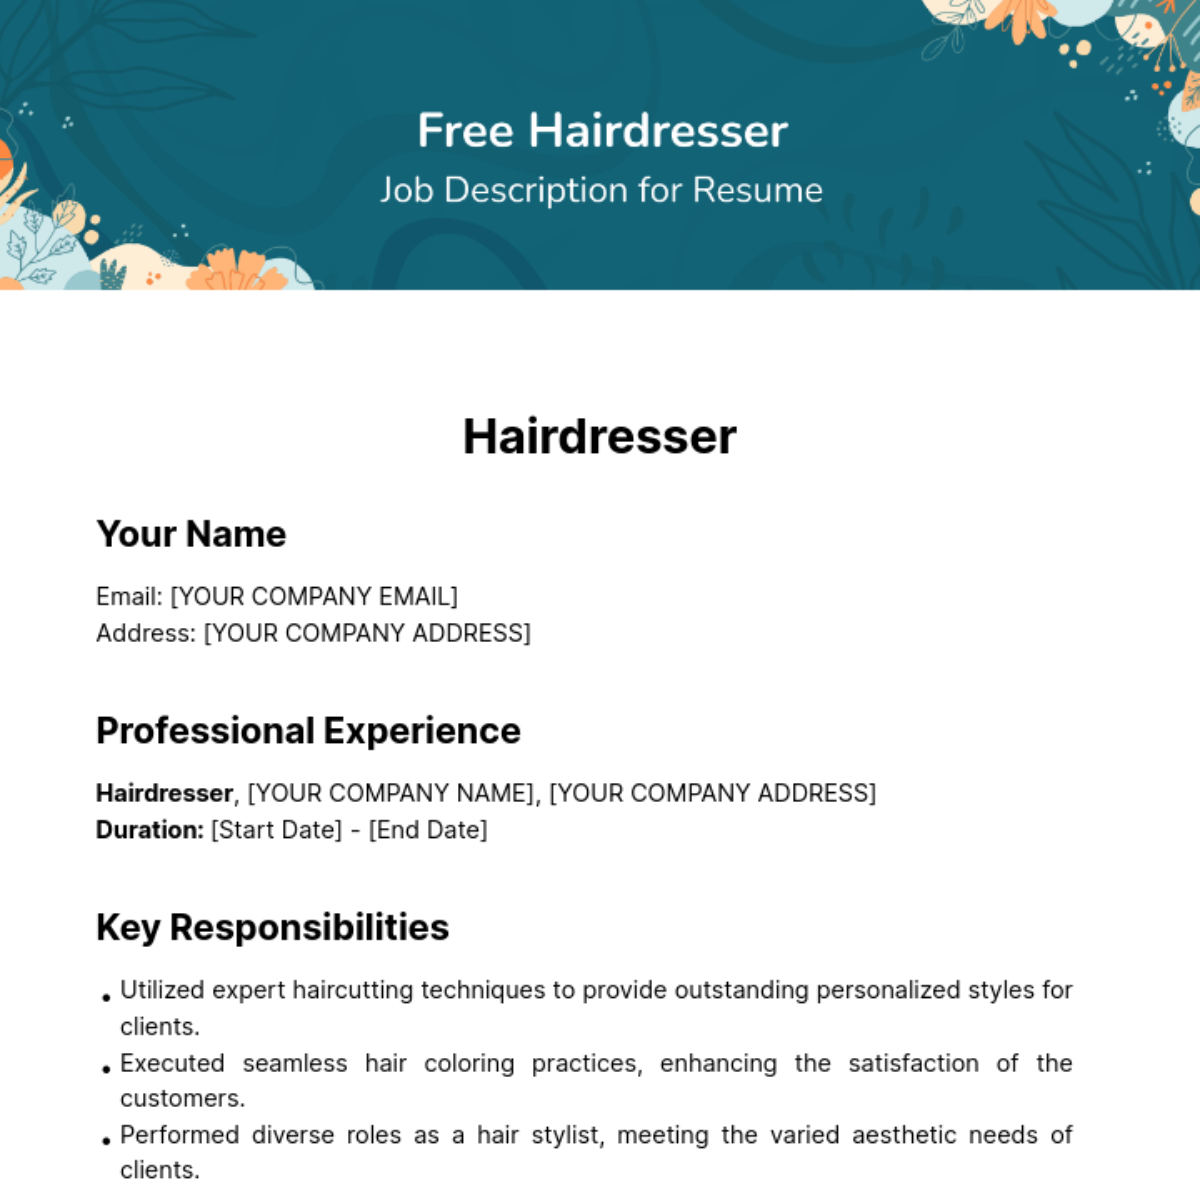 Free Hairdresser Job Description for Resume Template